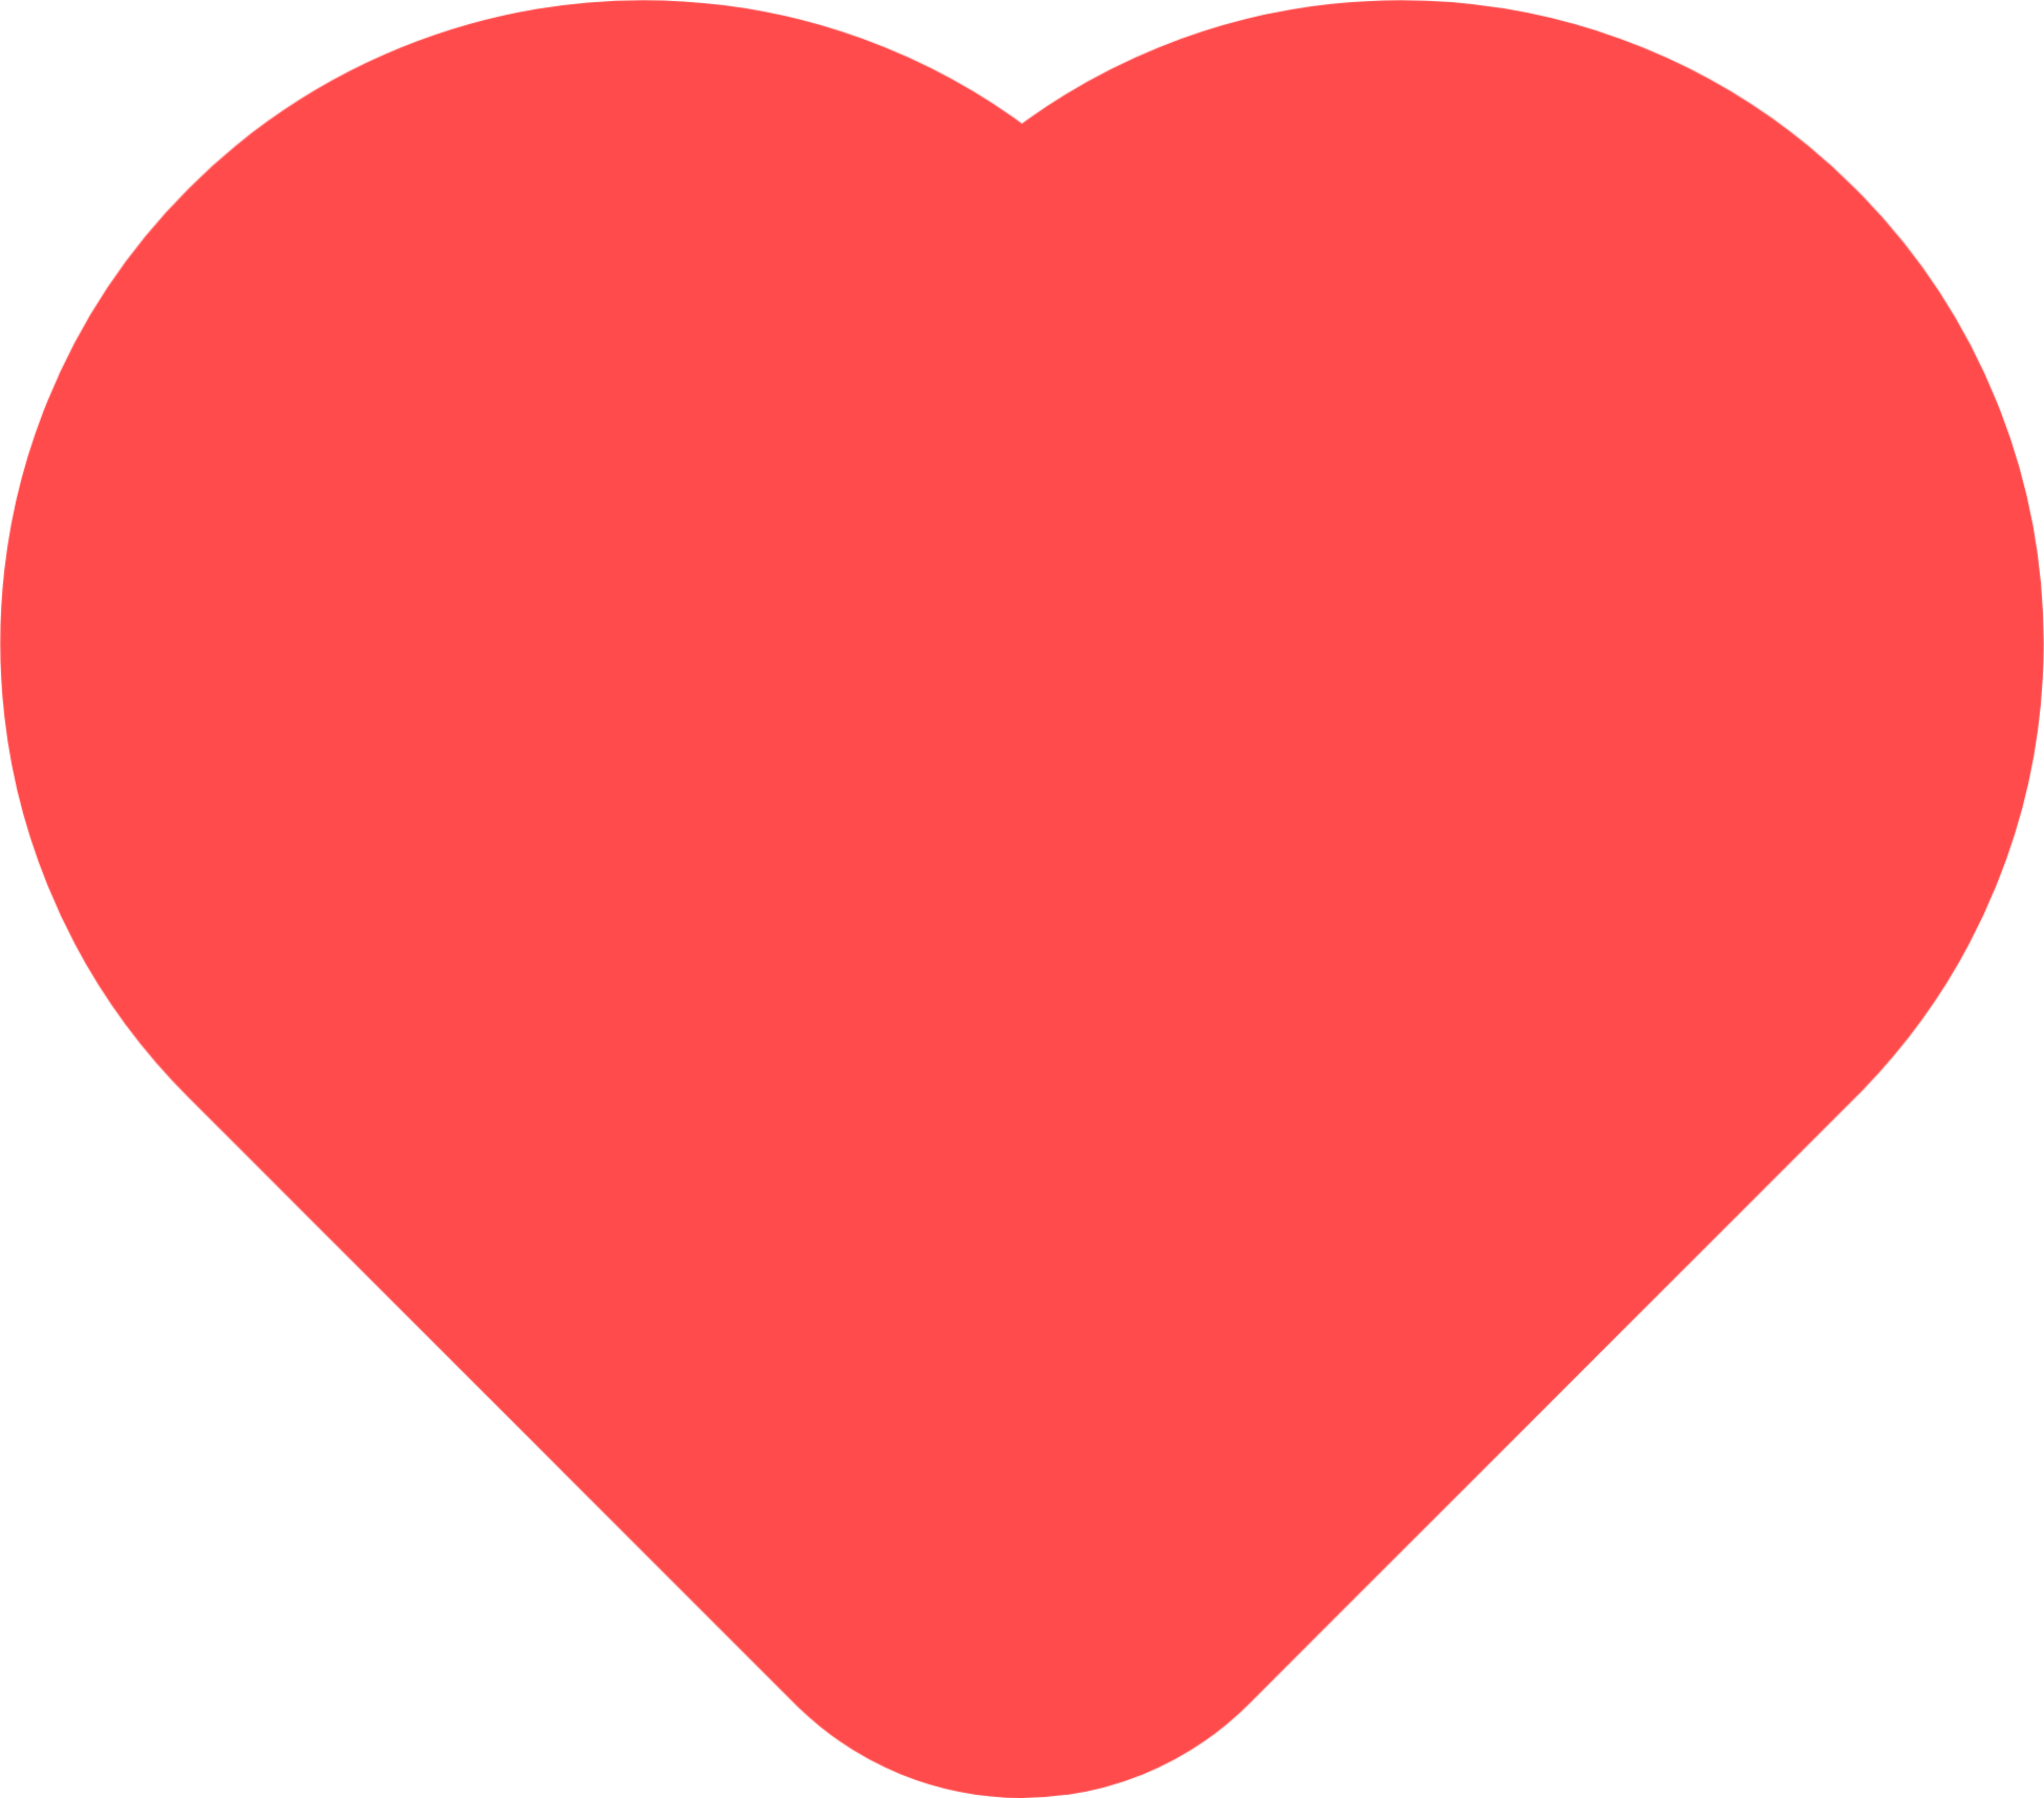 heart icon